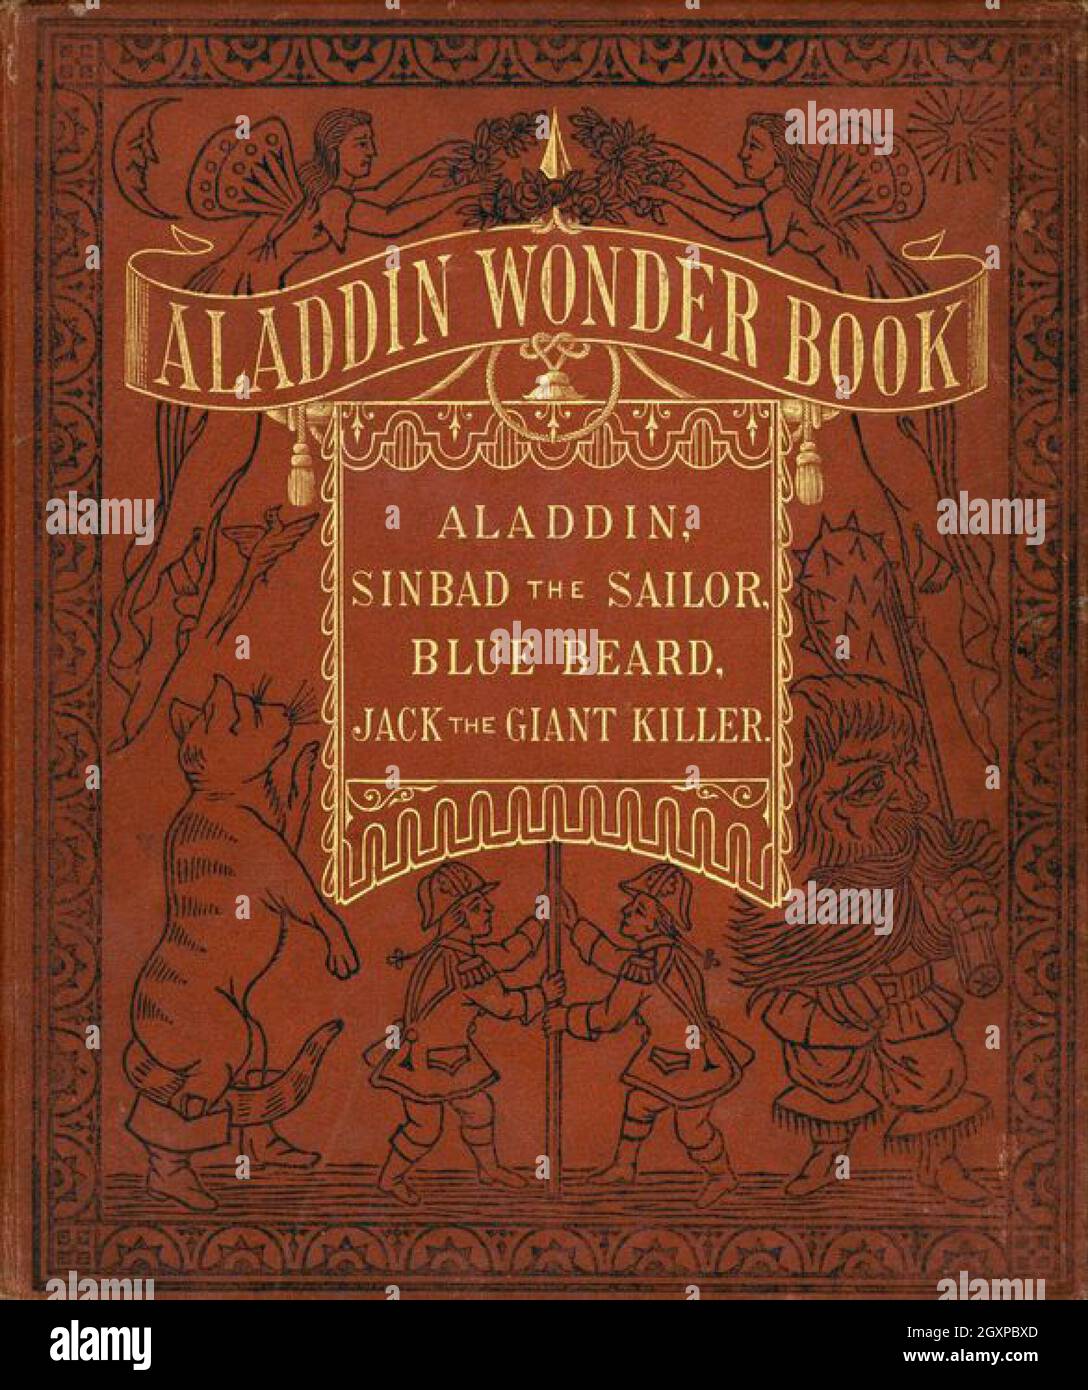 Aladdin Wonder Book Stock Photo